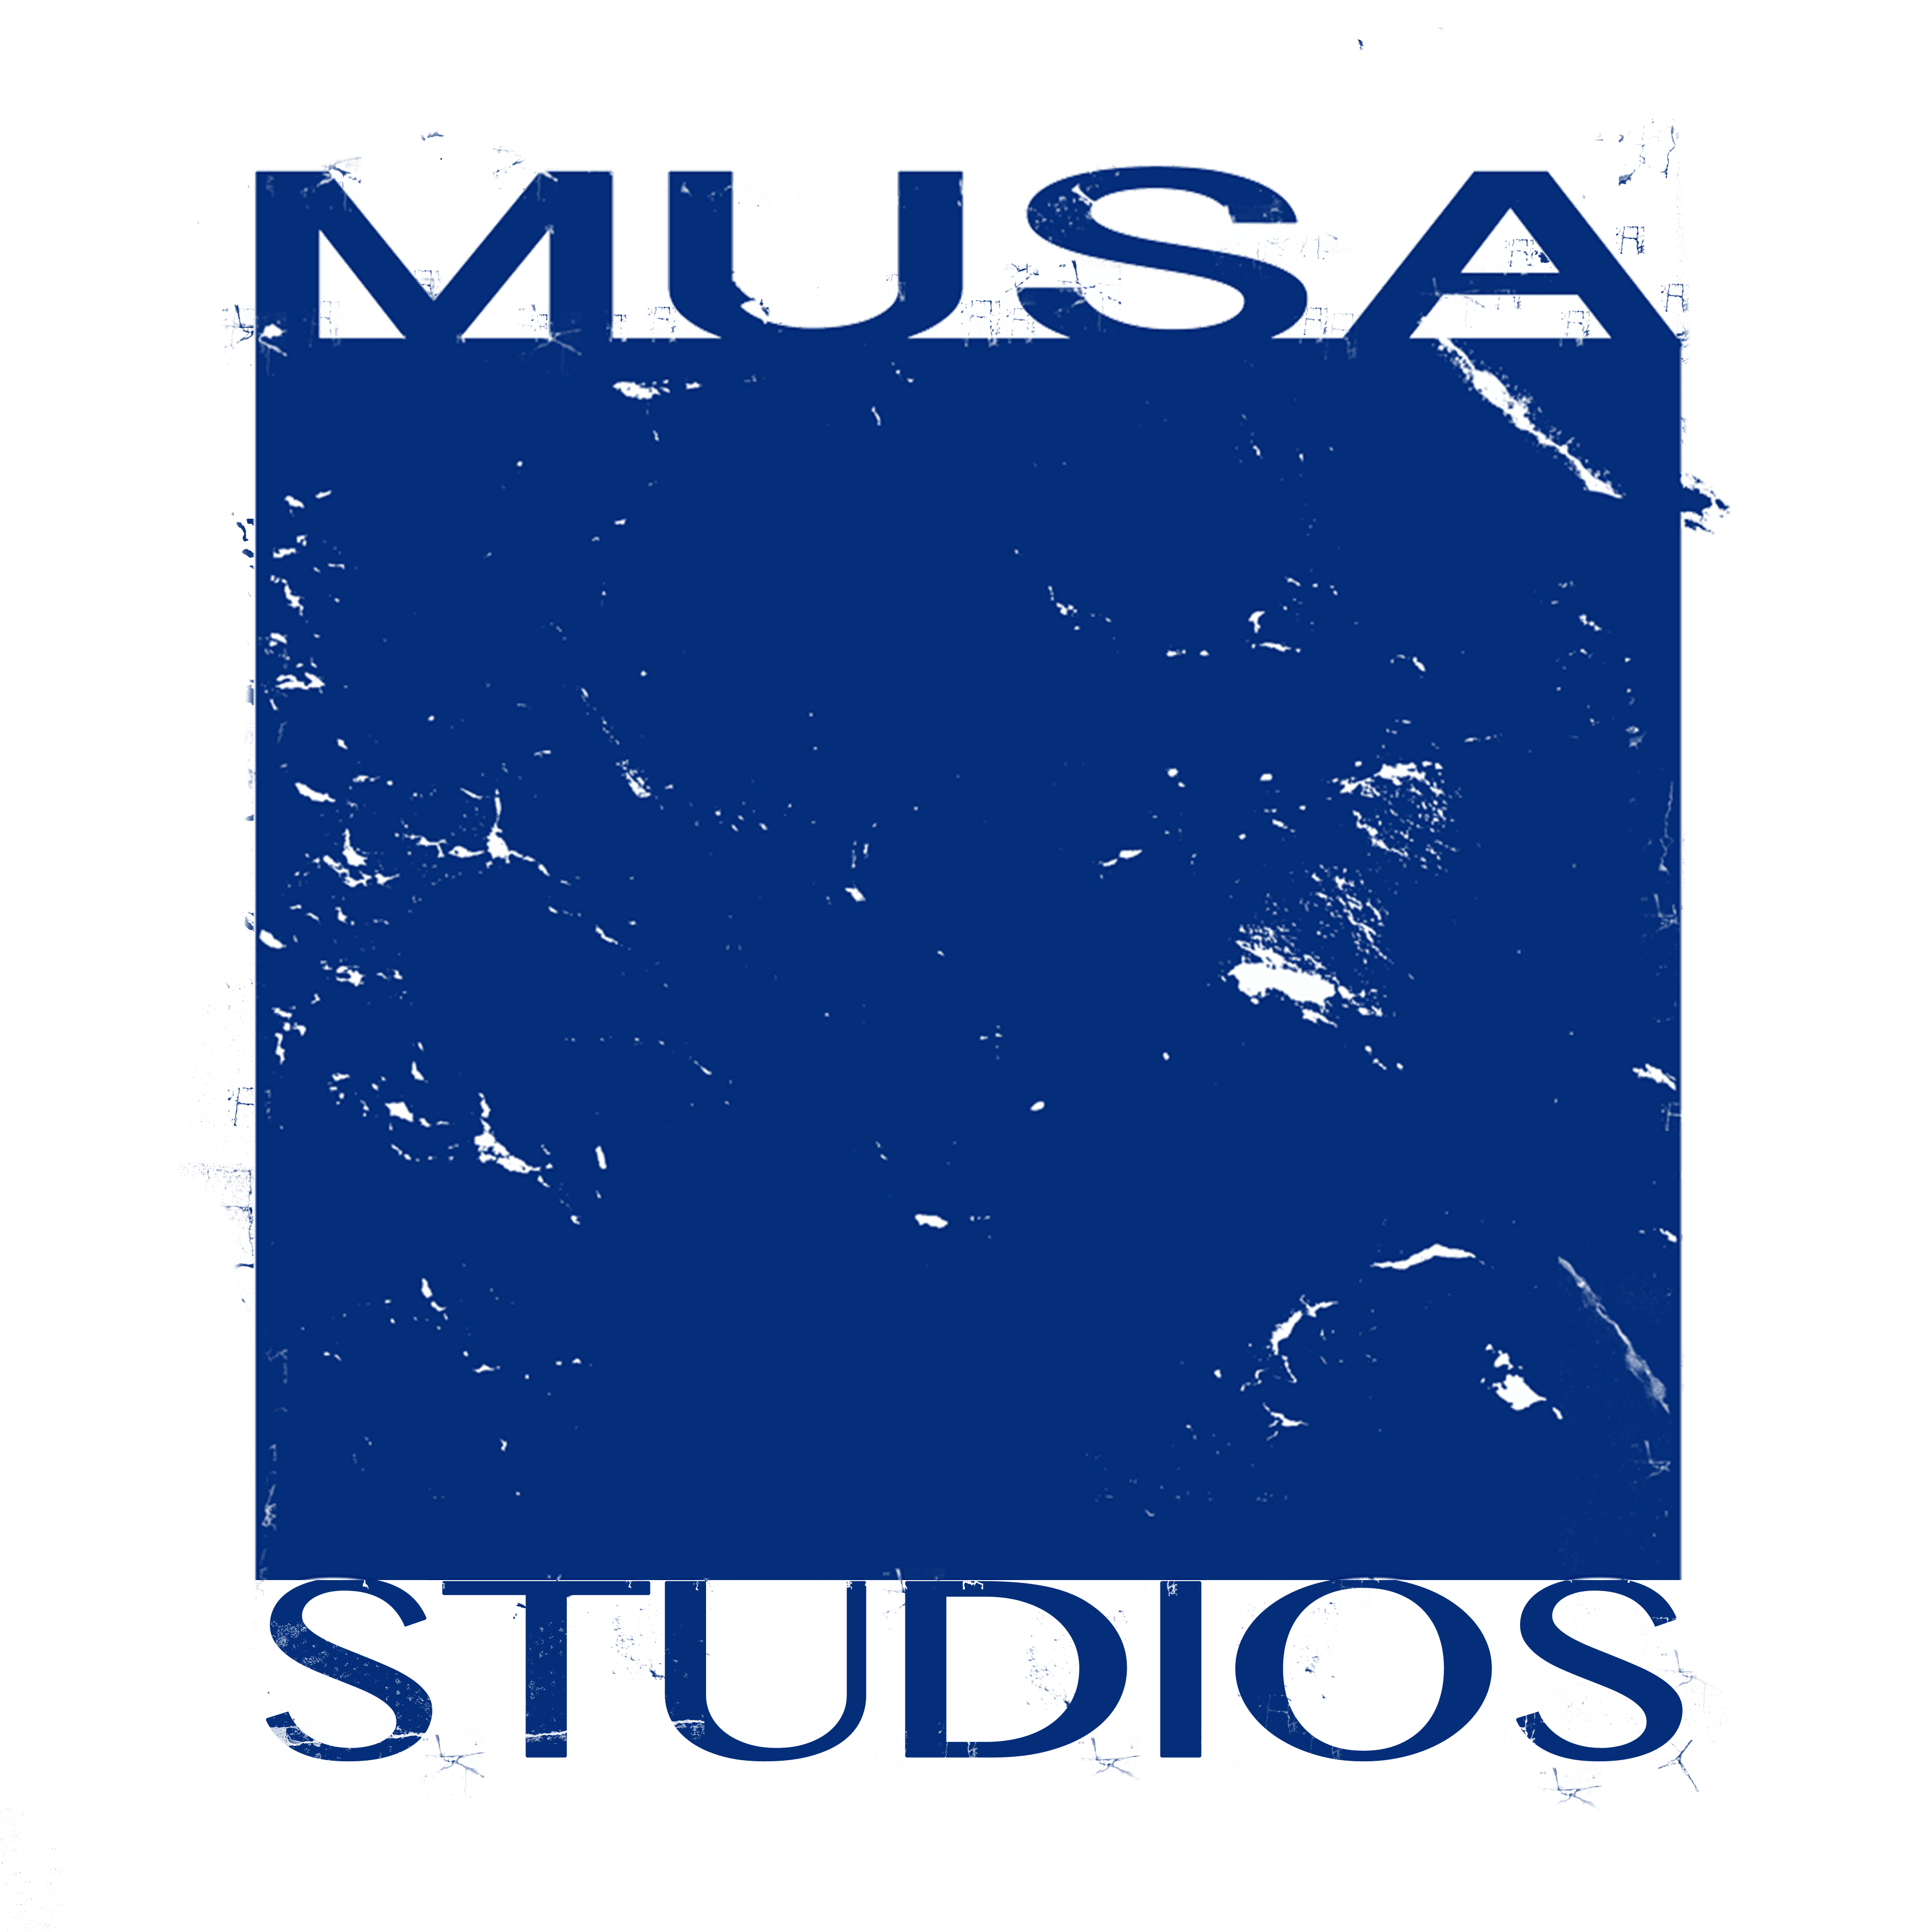 Tarek Musa Studios